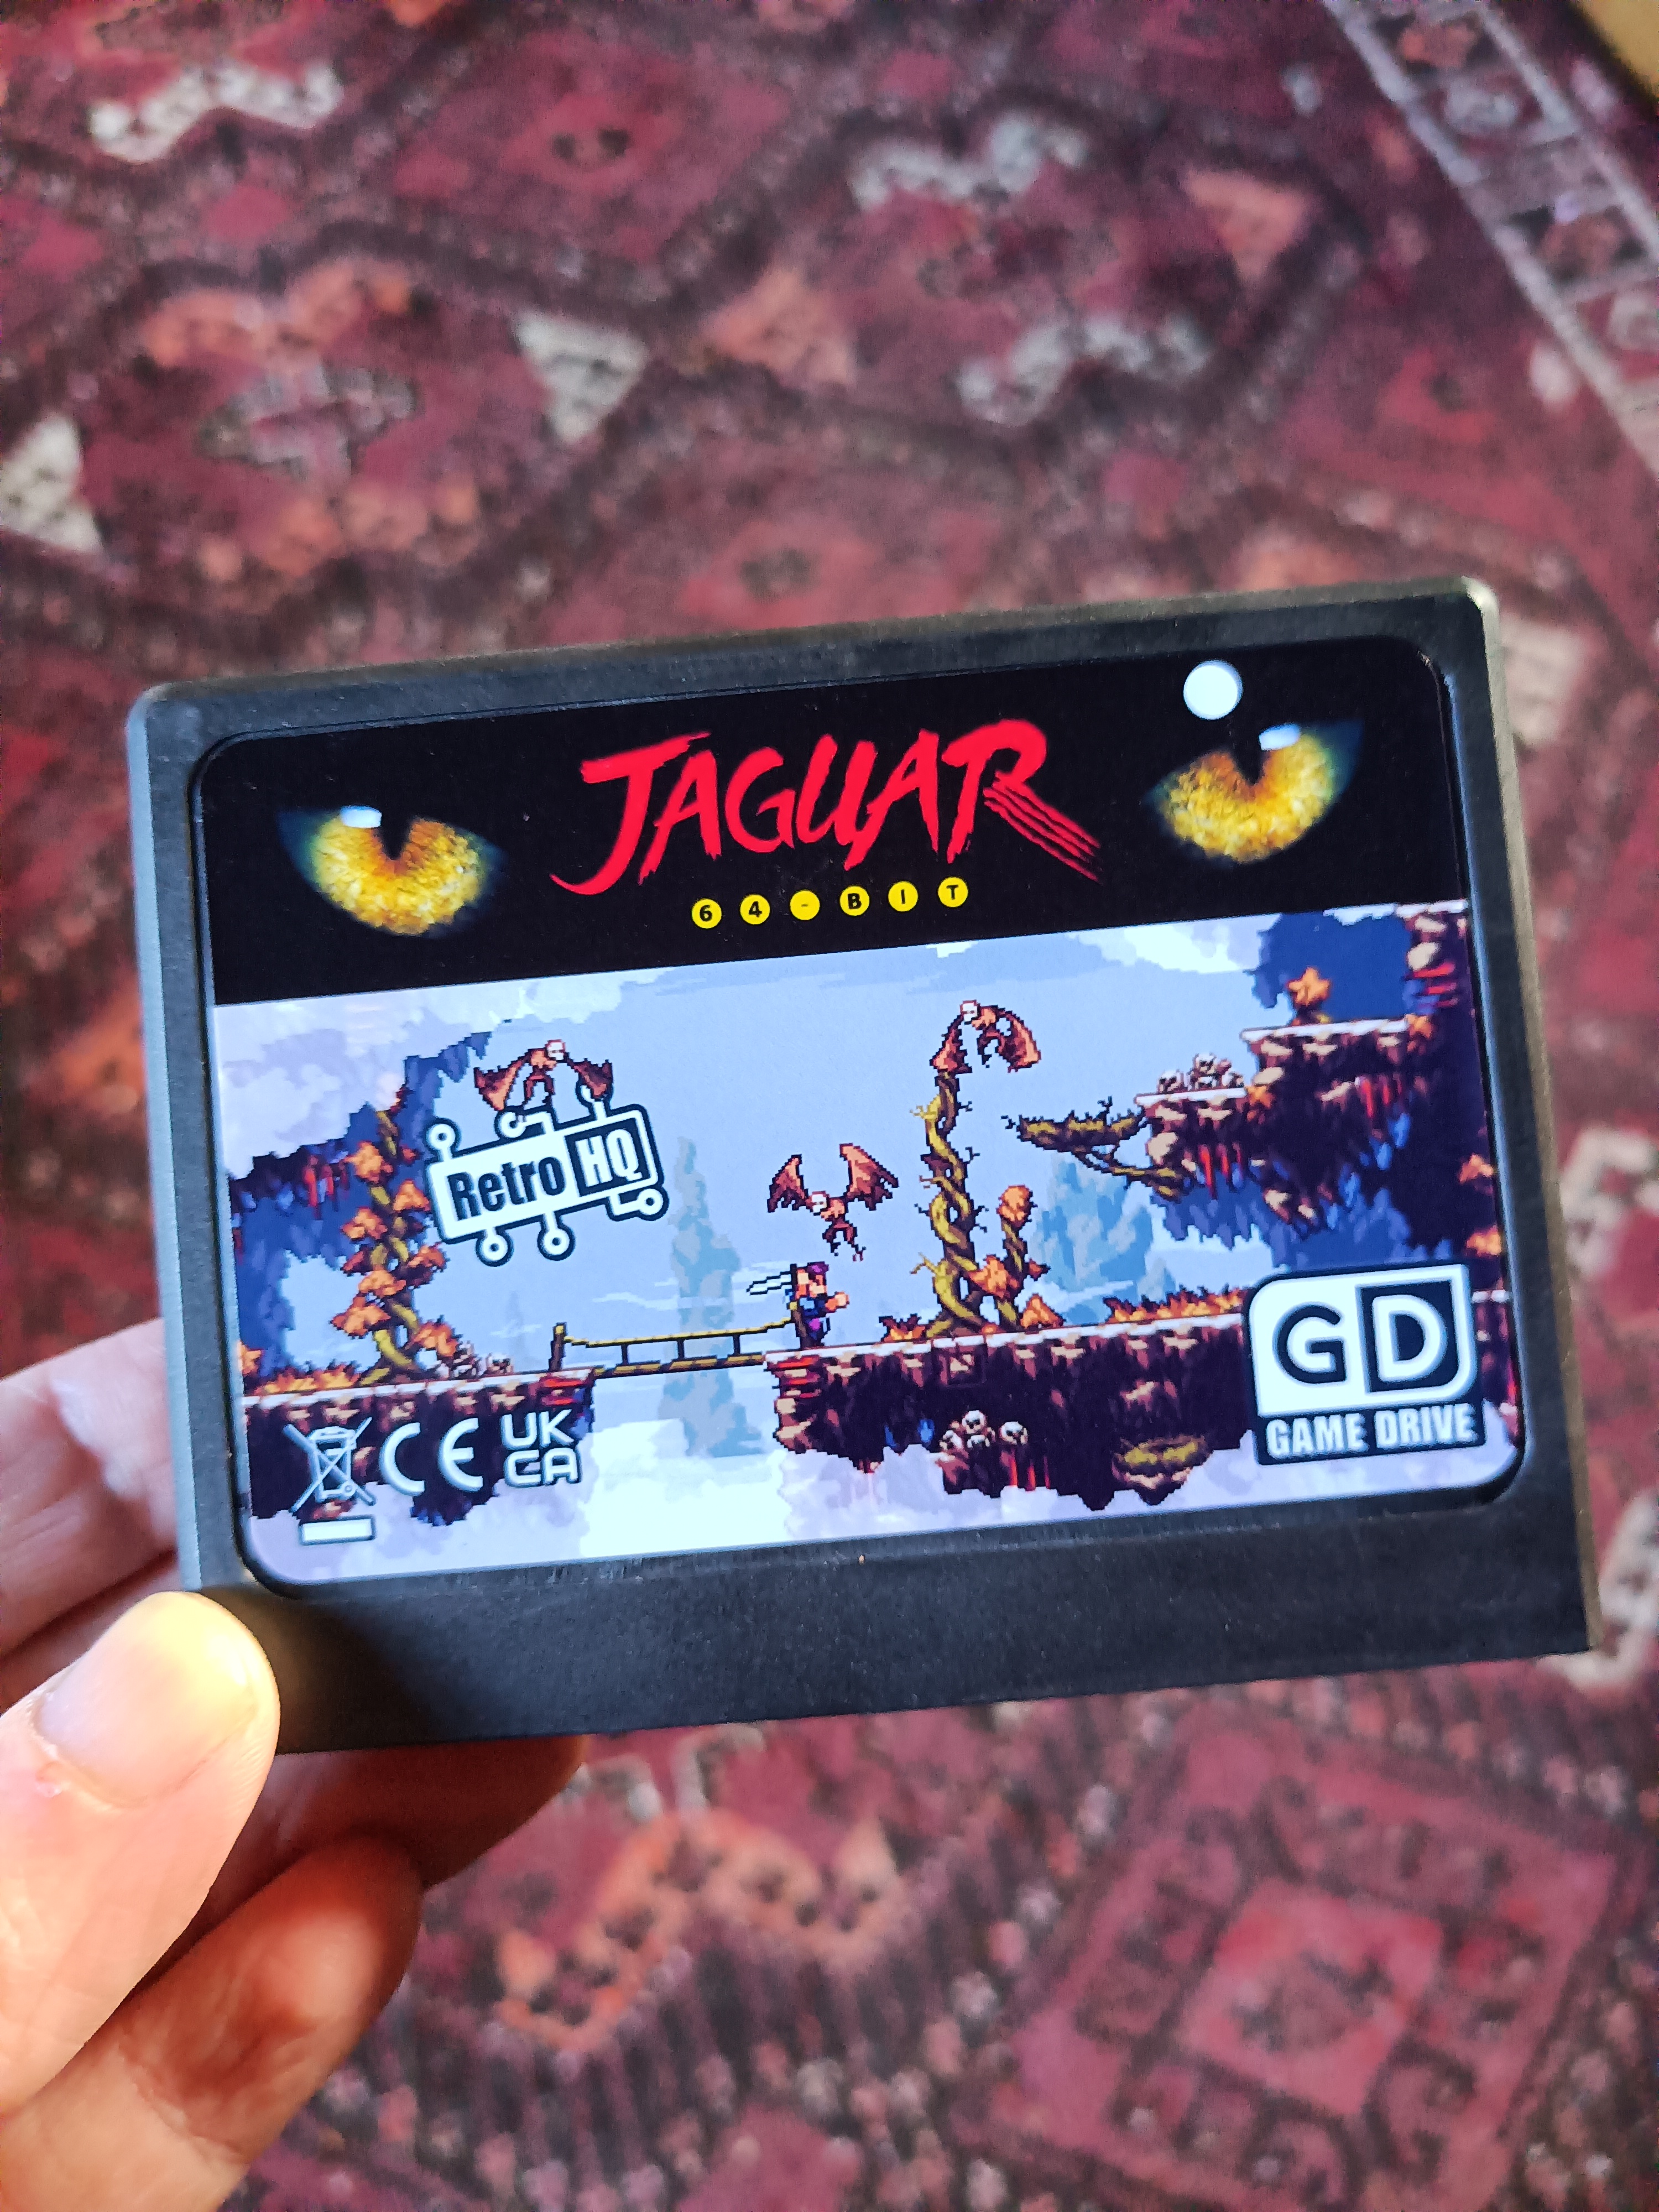 Atari Jaguar GameDrive from RetroHQ